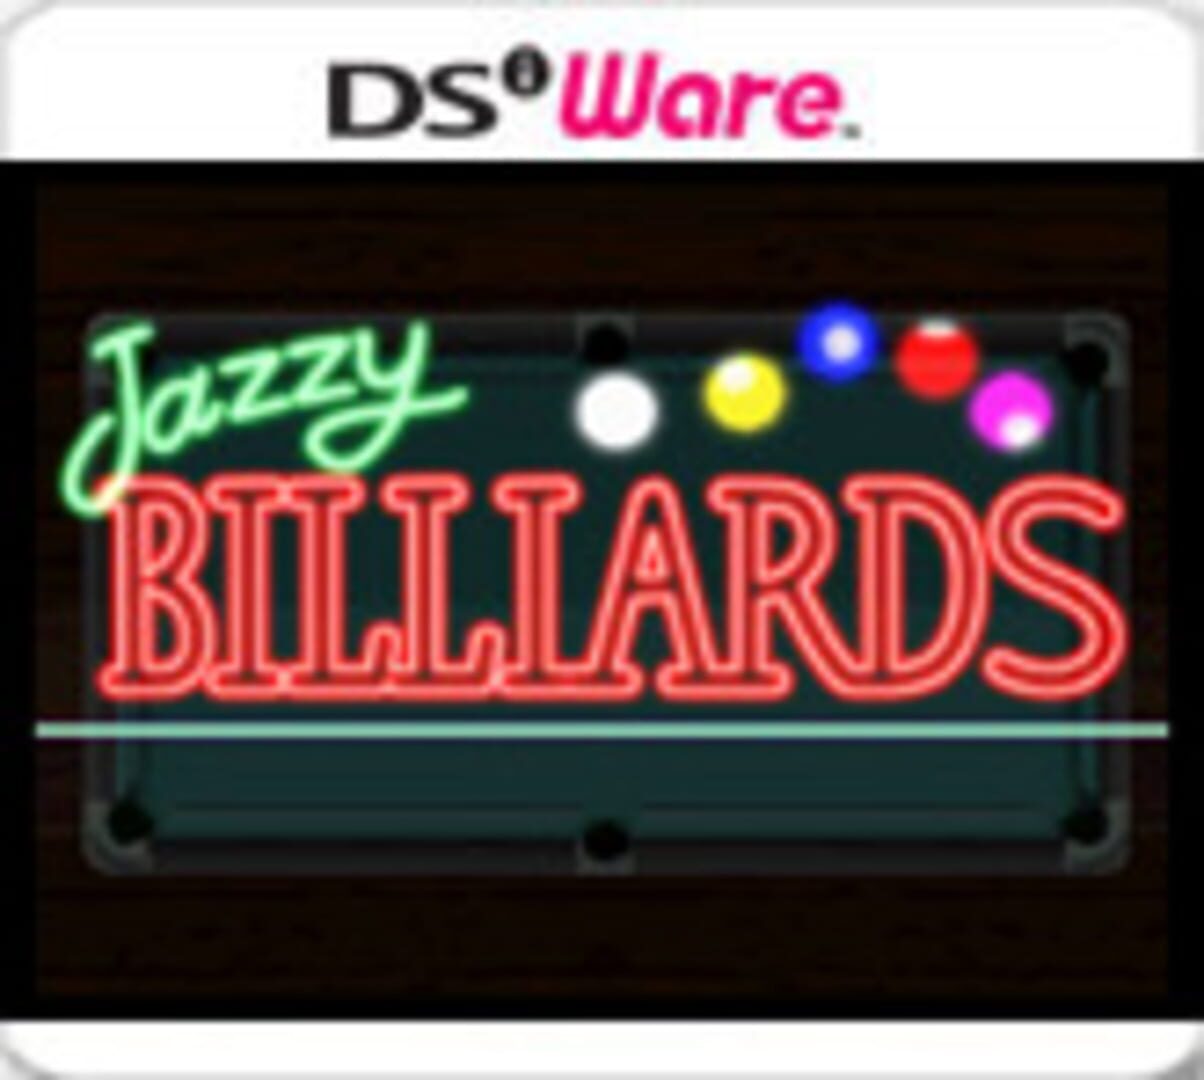 Jazzy Billiards